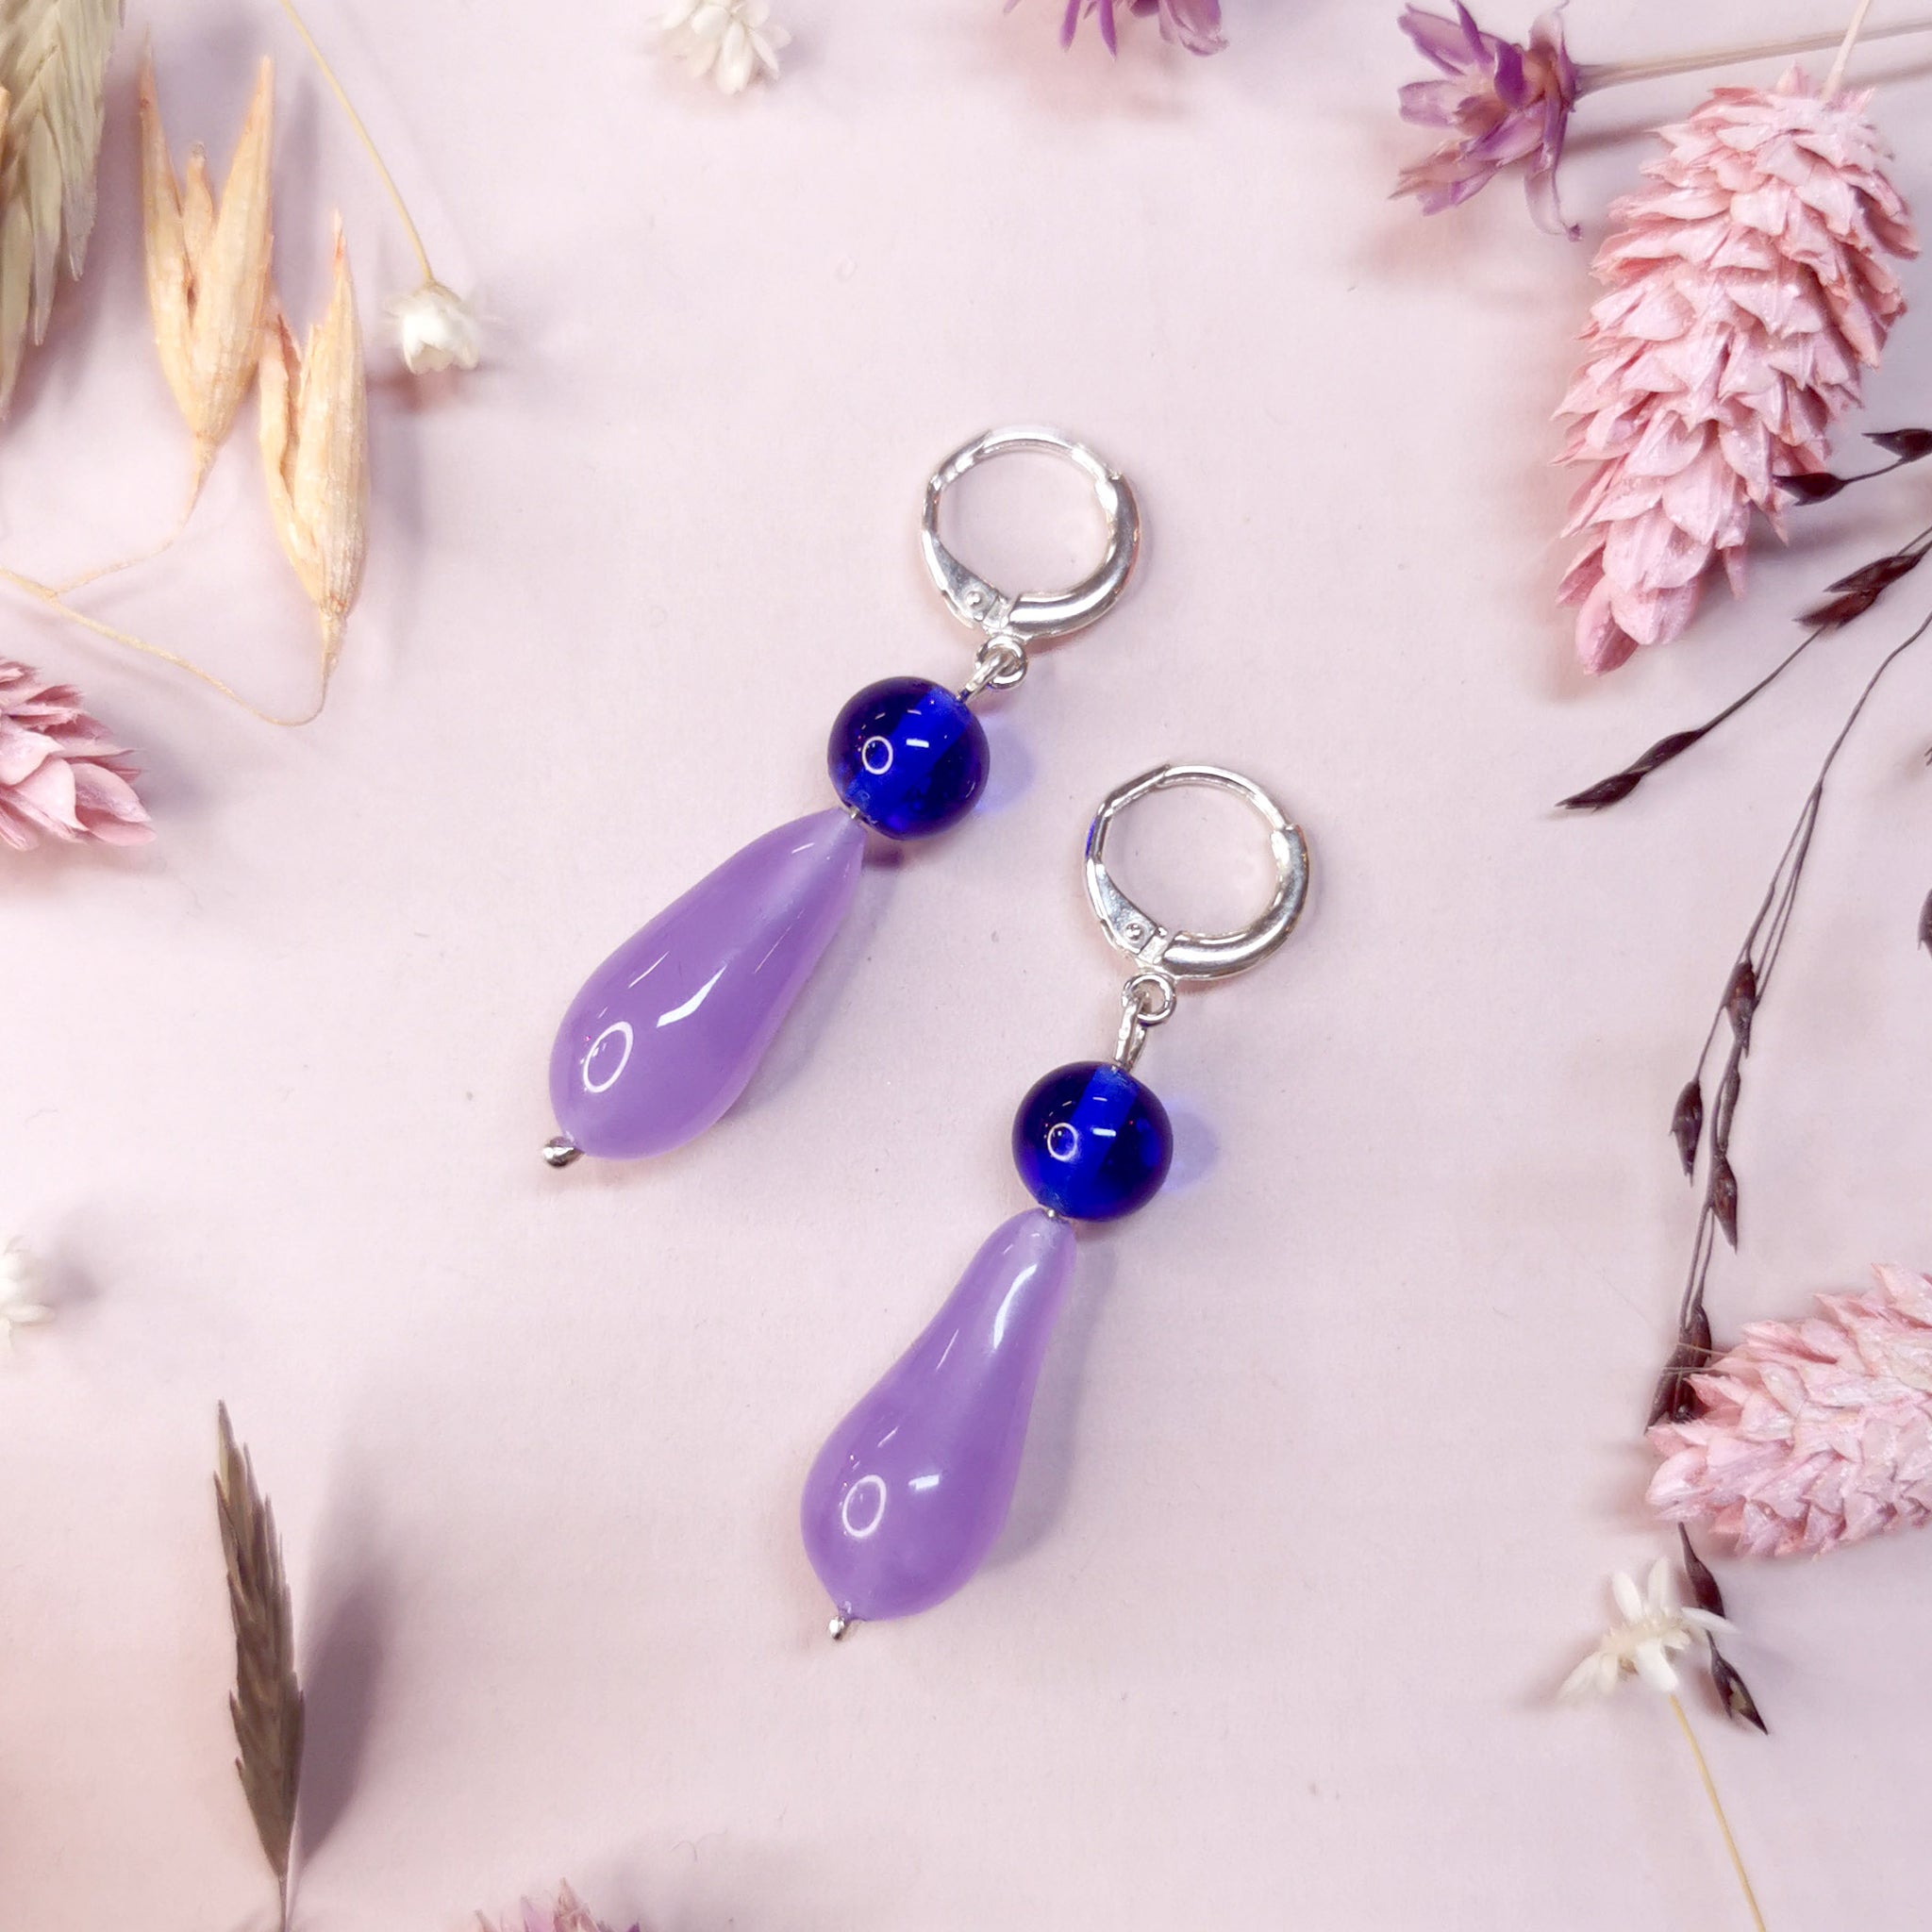 LaLa earrings, Royal blue and Lilac